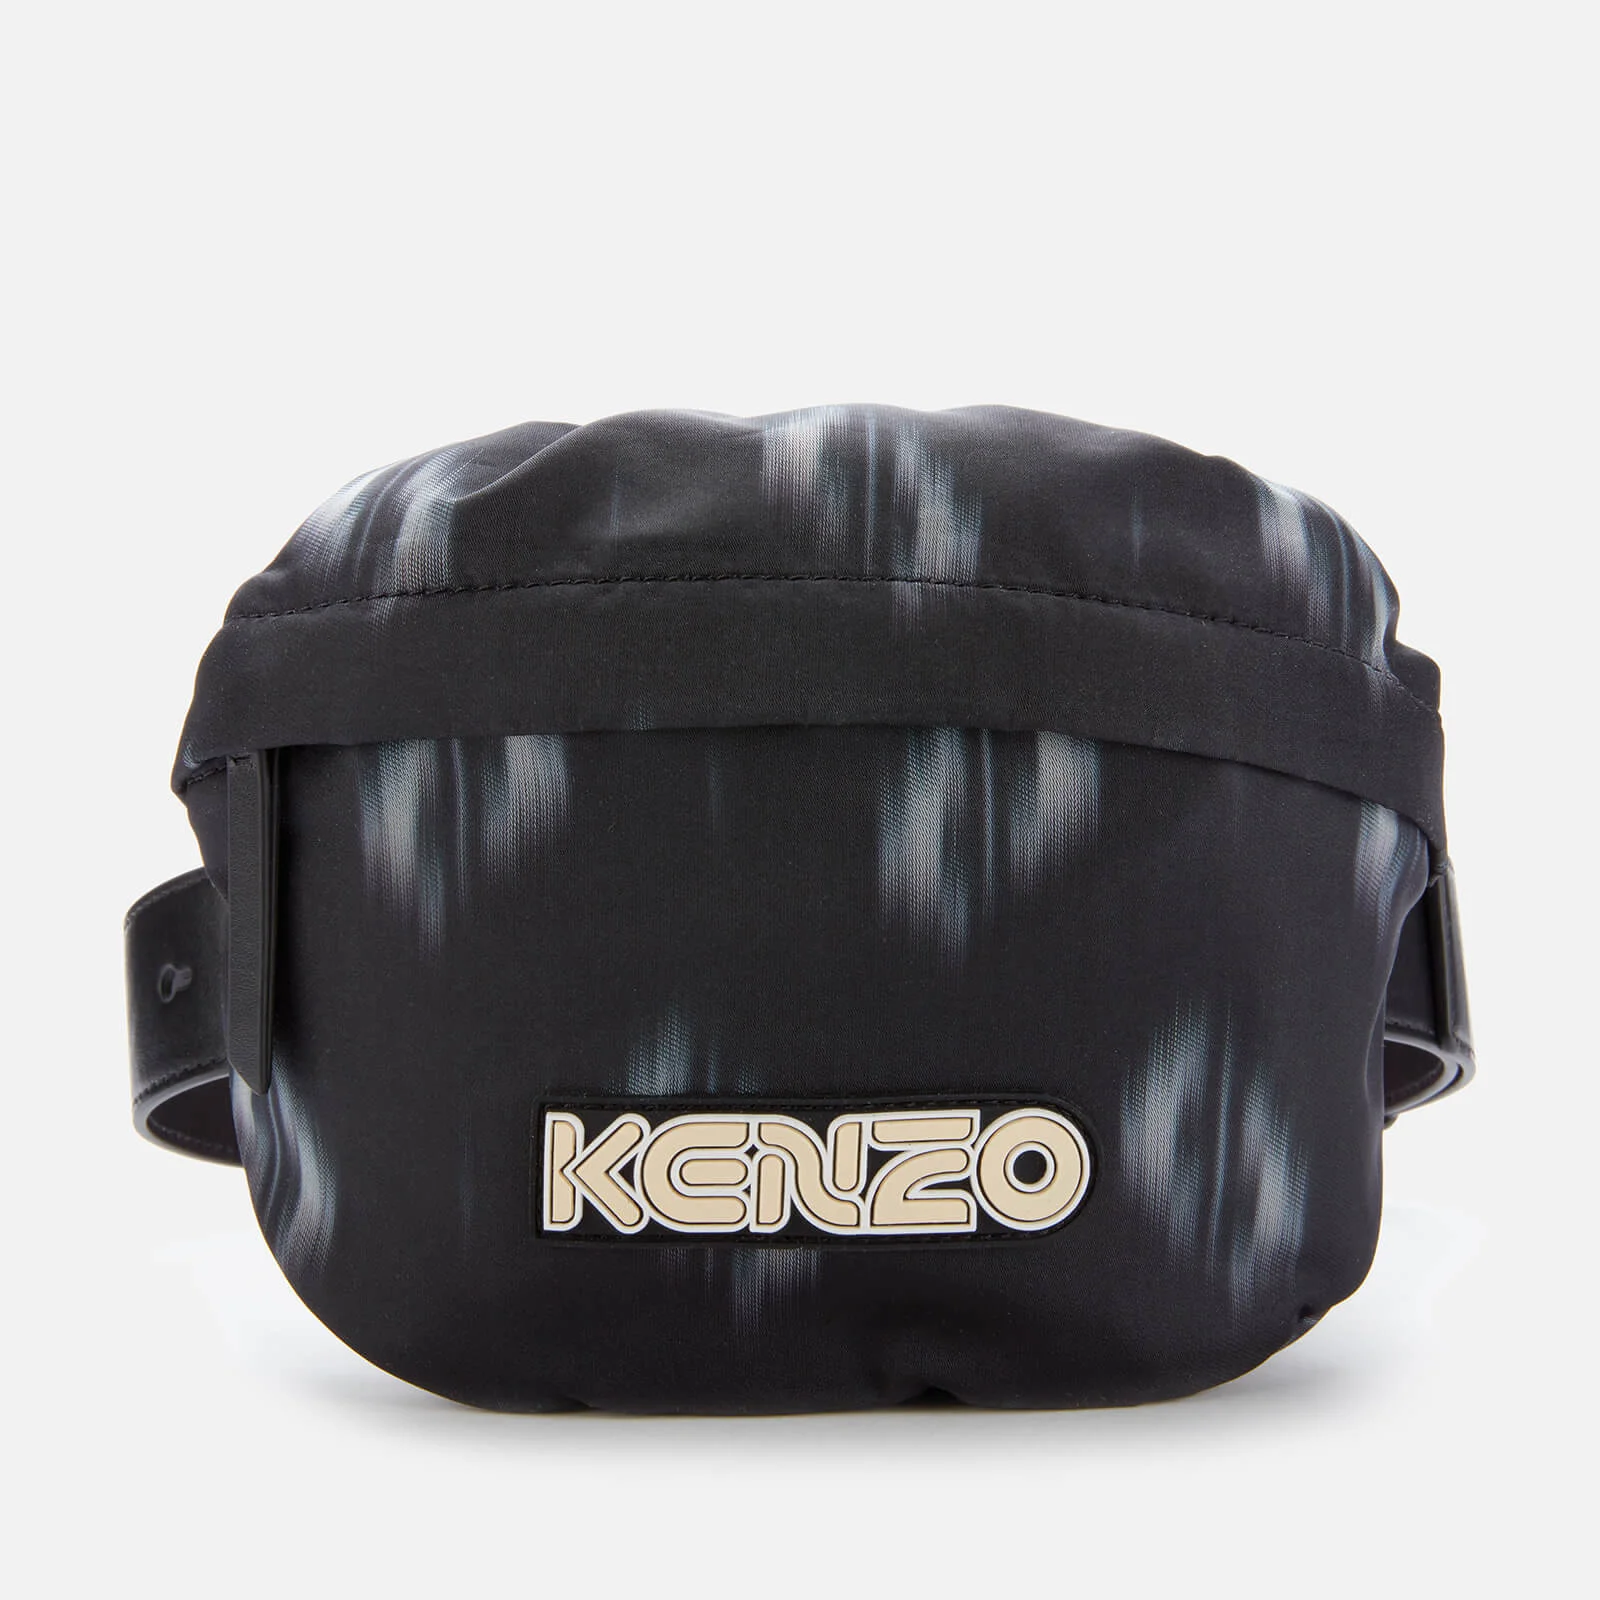 KENZO Women's Belt Bag - Black Image 1